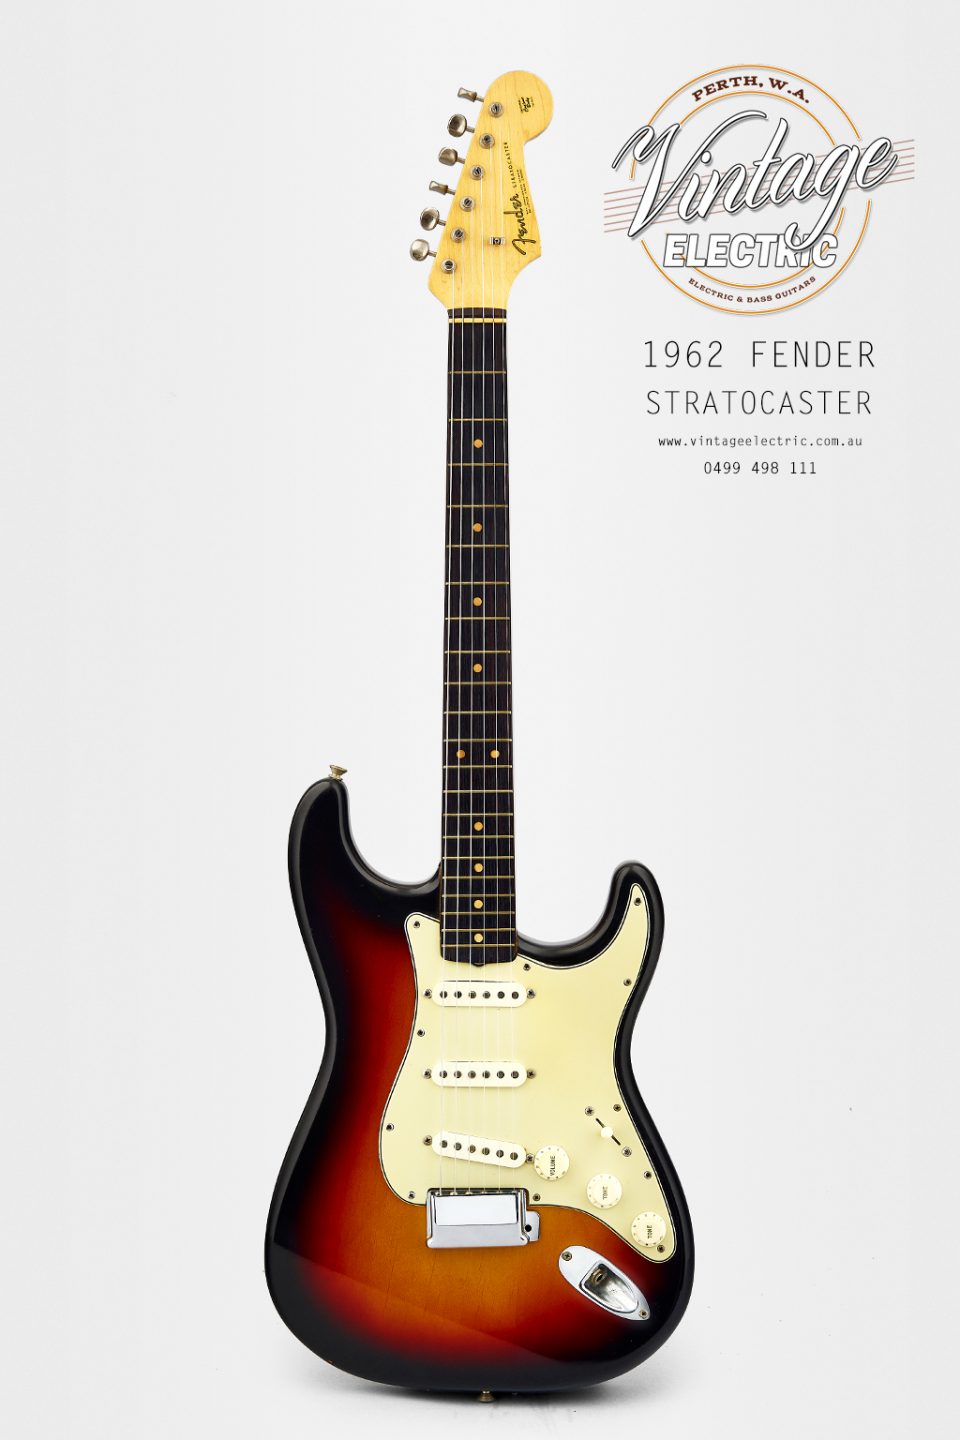 1962 Fender Stratocaster Sydney